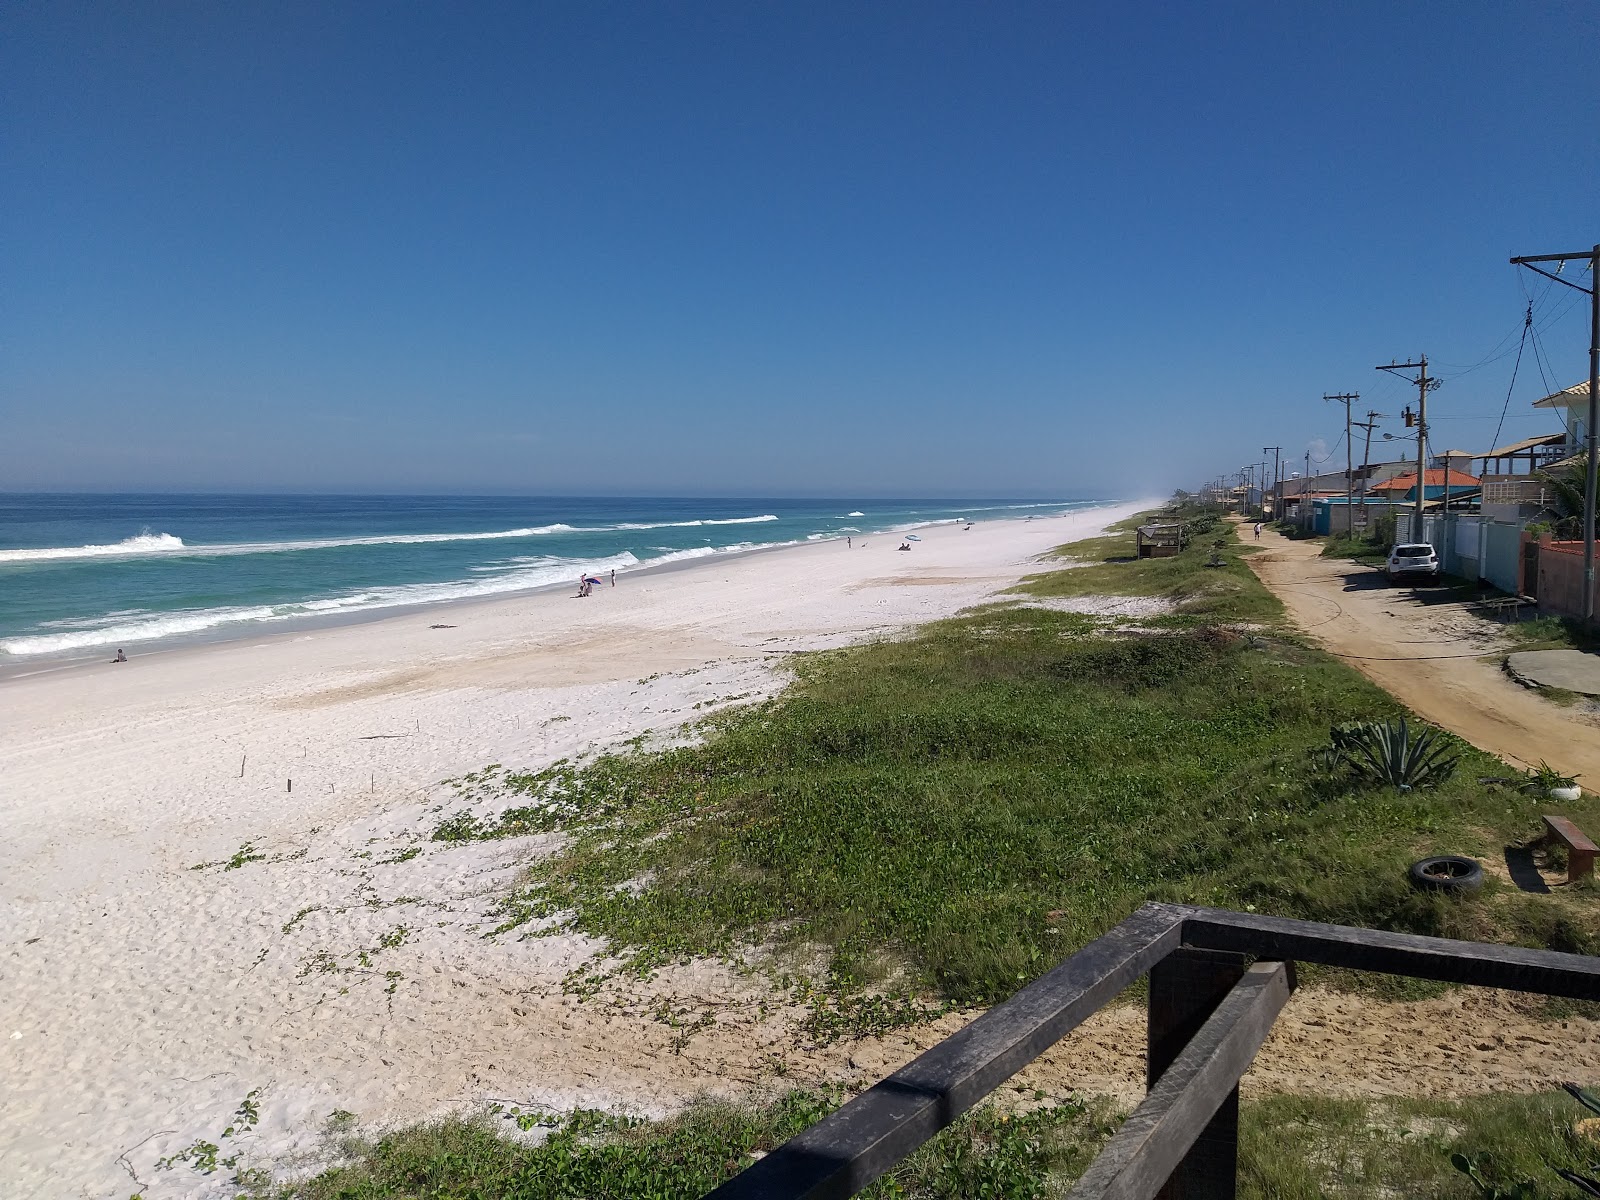 Foto av Praia Grande de Figueira med hög nivå av renlighet